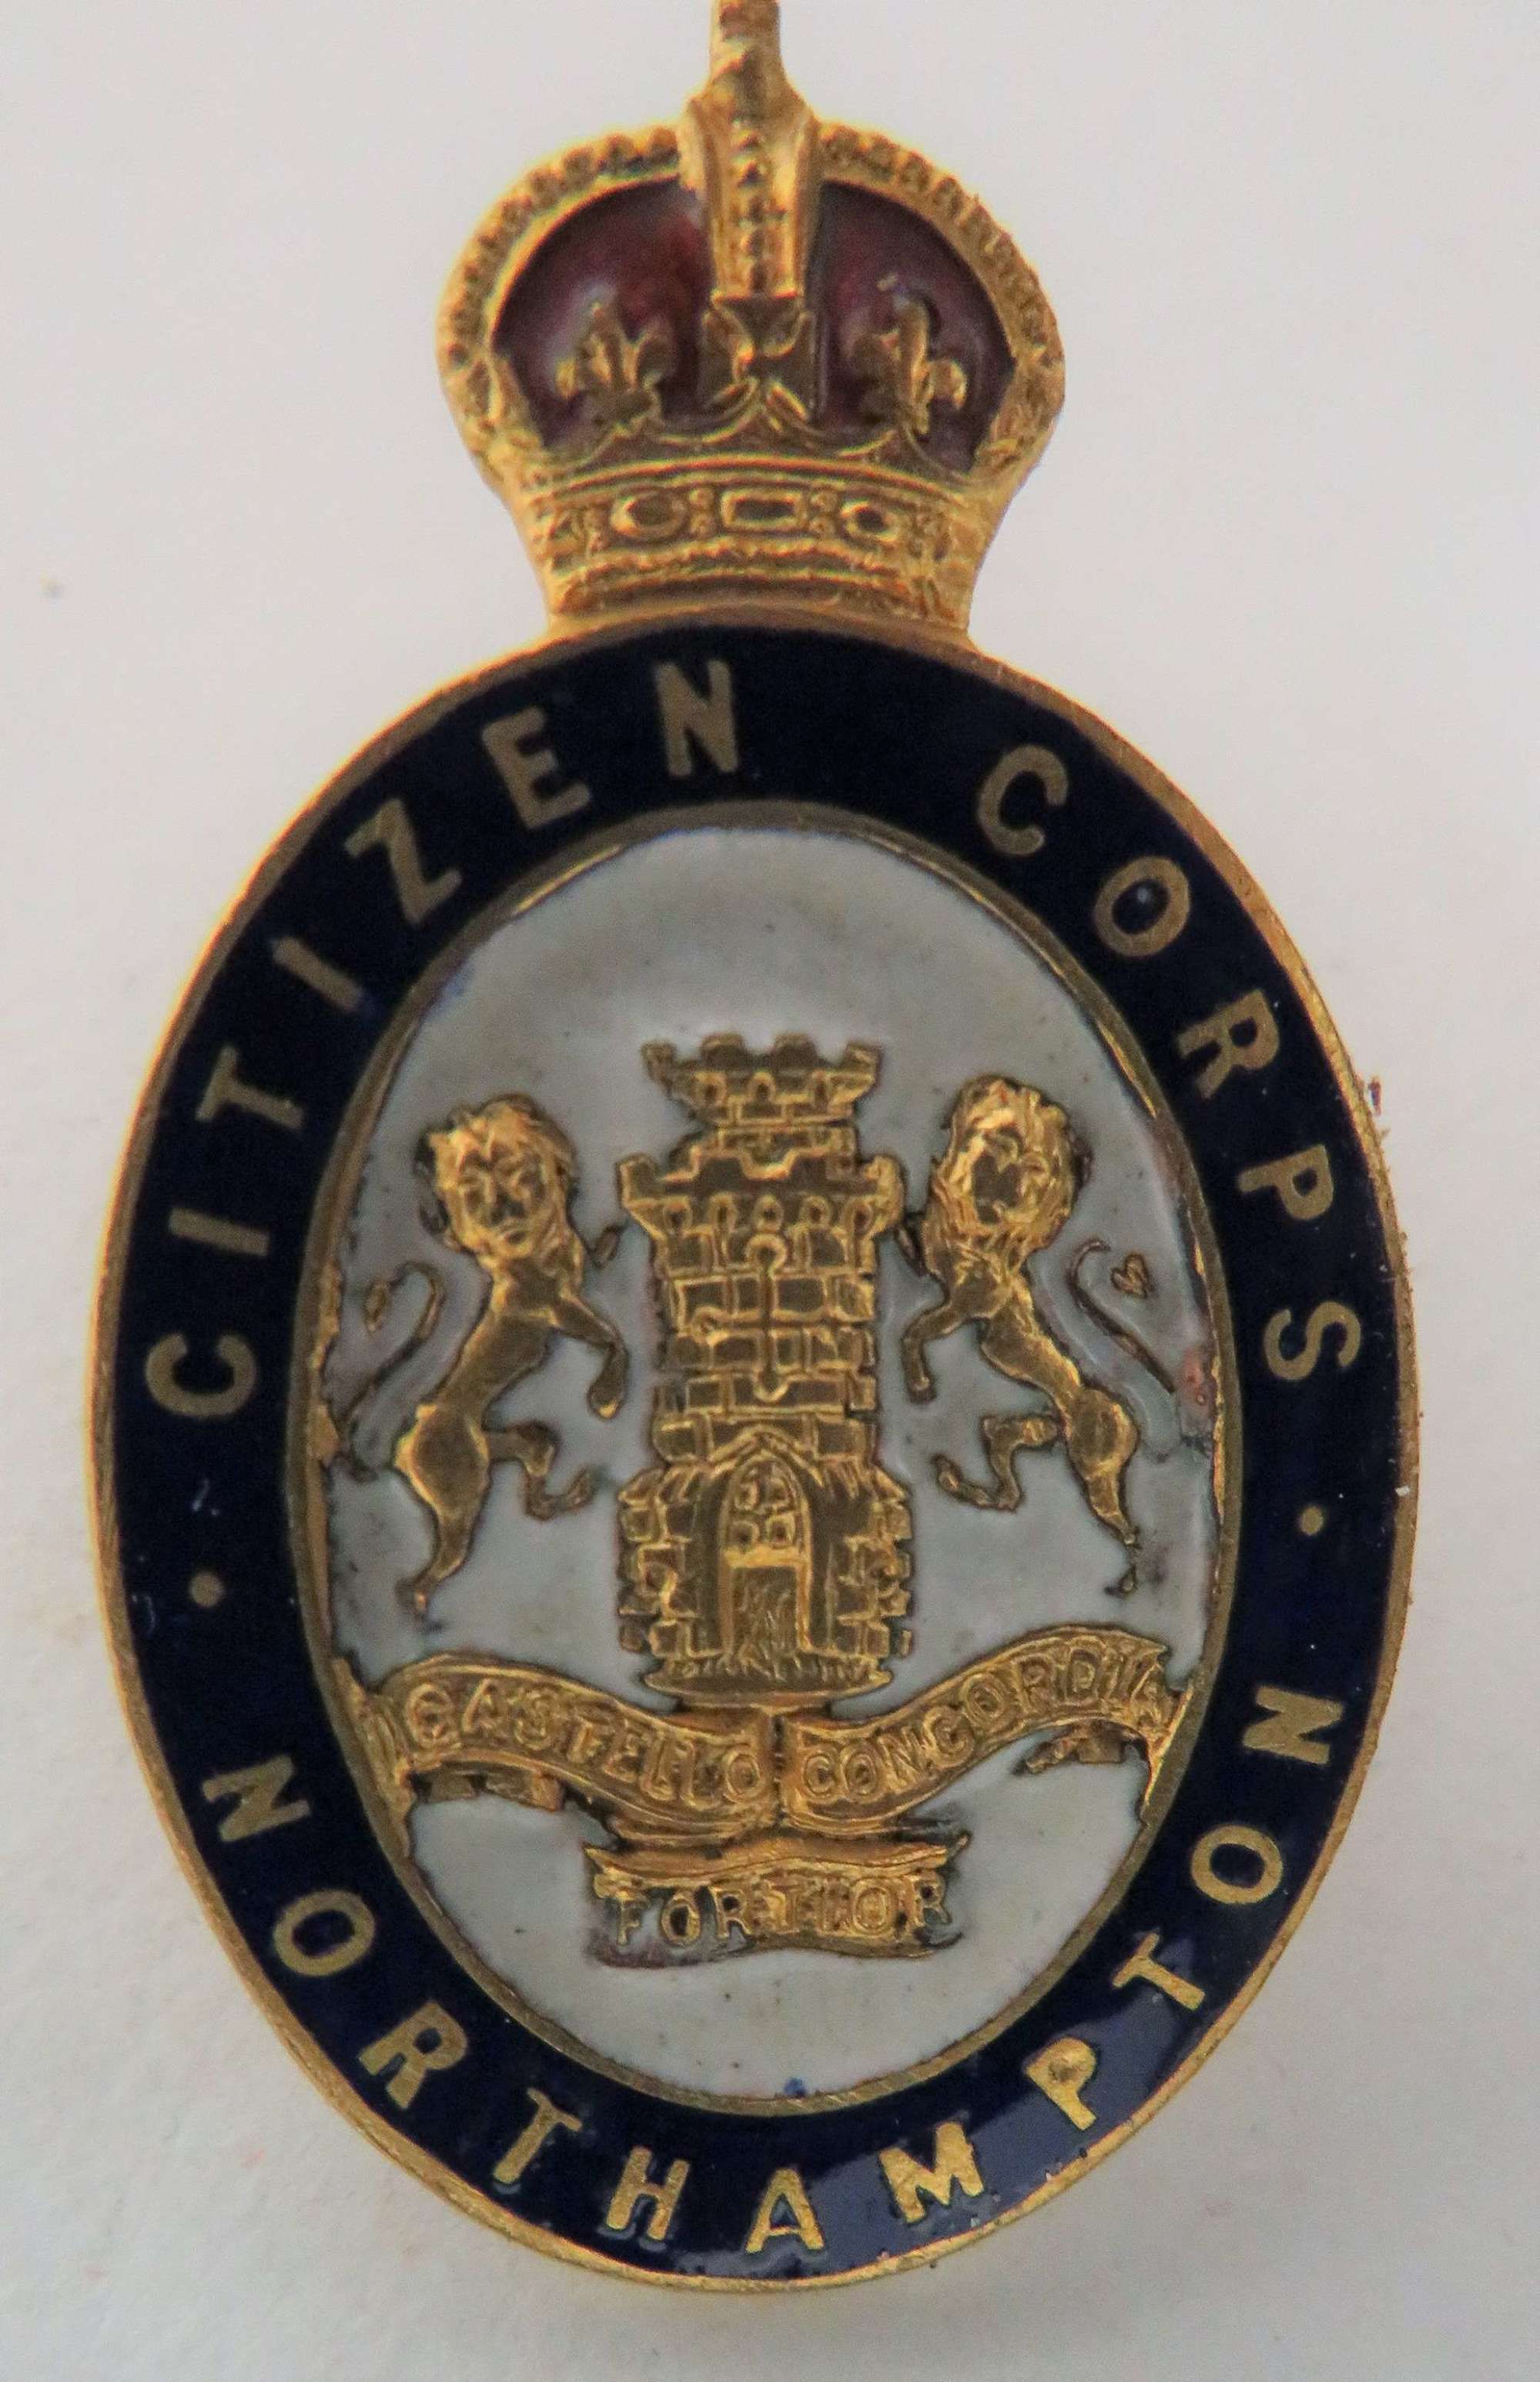 Northampton Citizen Corps Lapel Badge